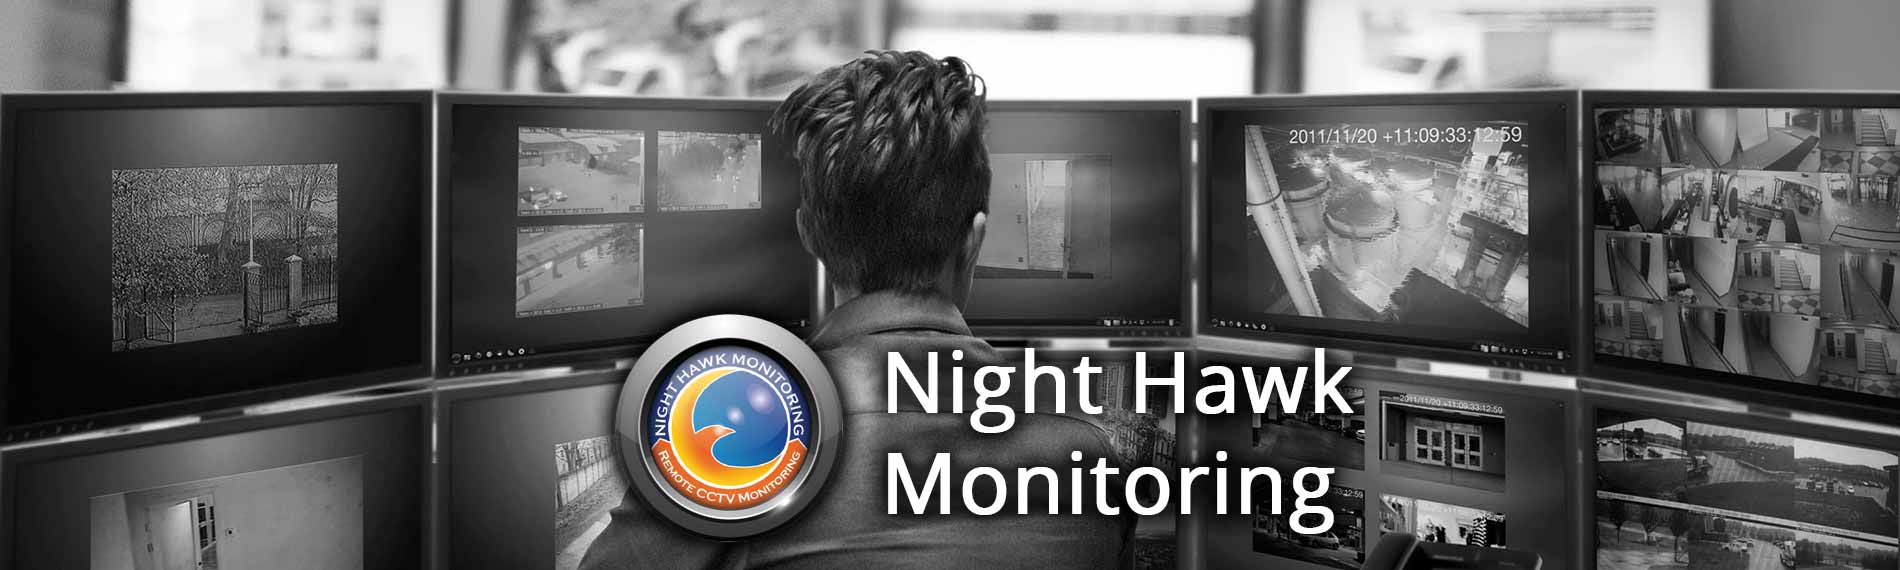 Remote Video Surveillance Newark - Live Security Cameras Monitoring Newark NJ